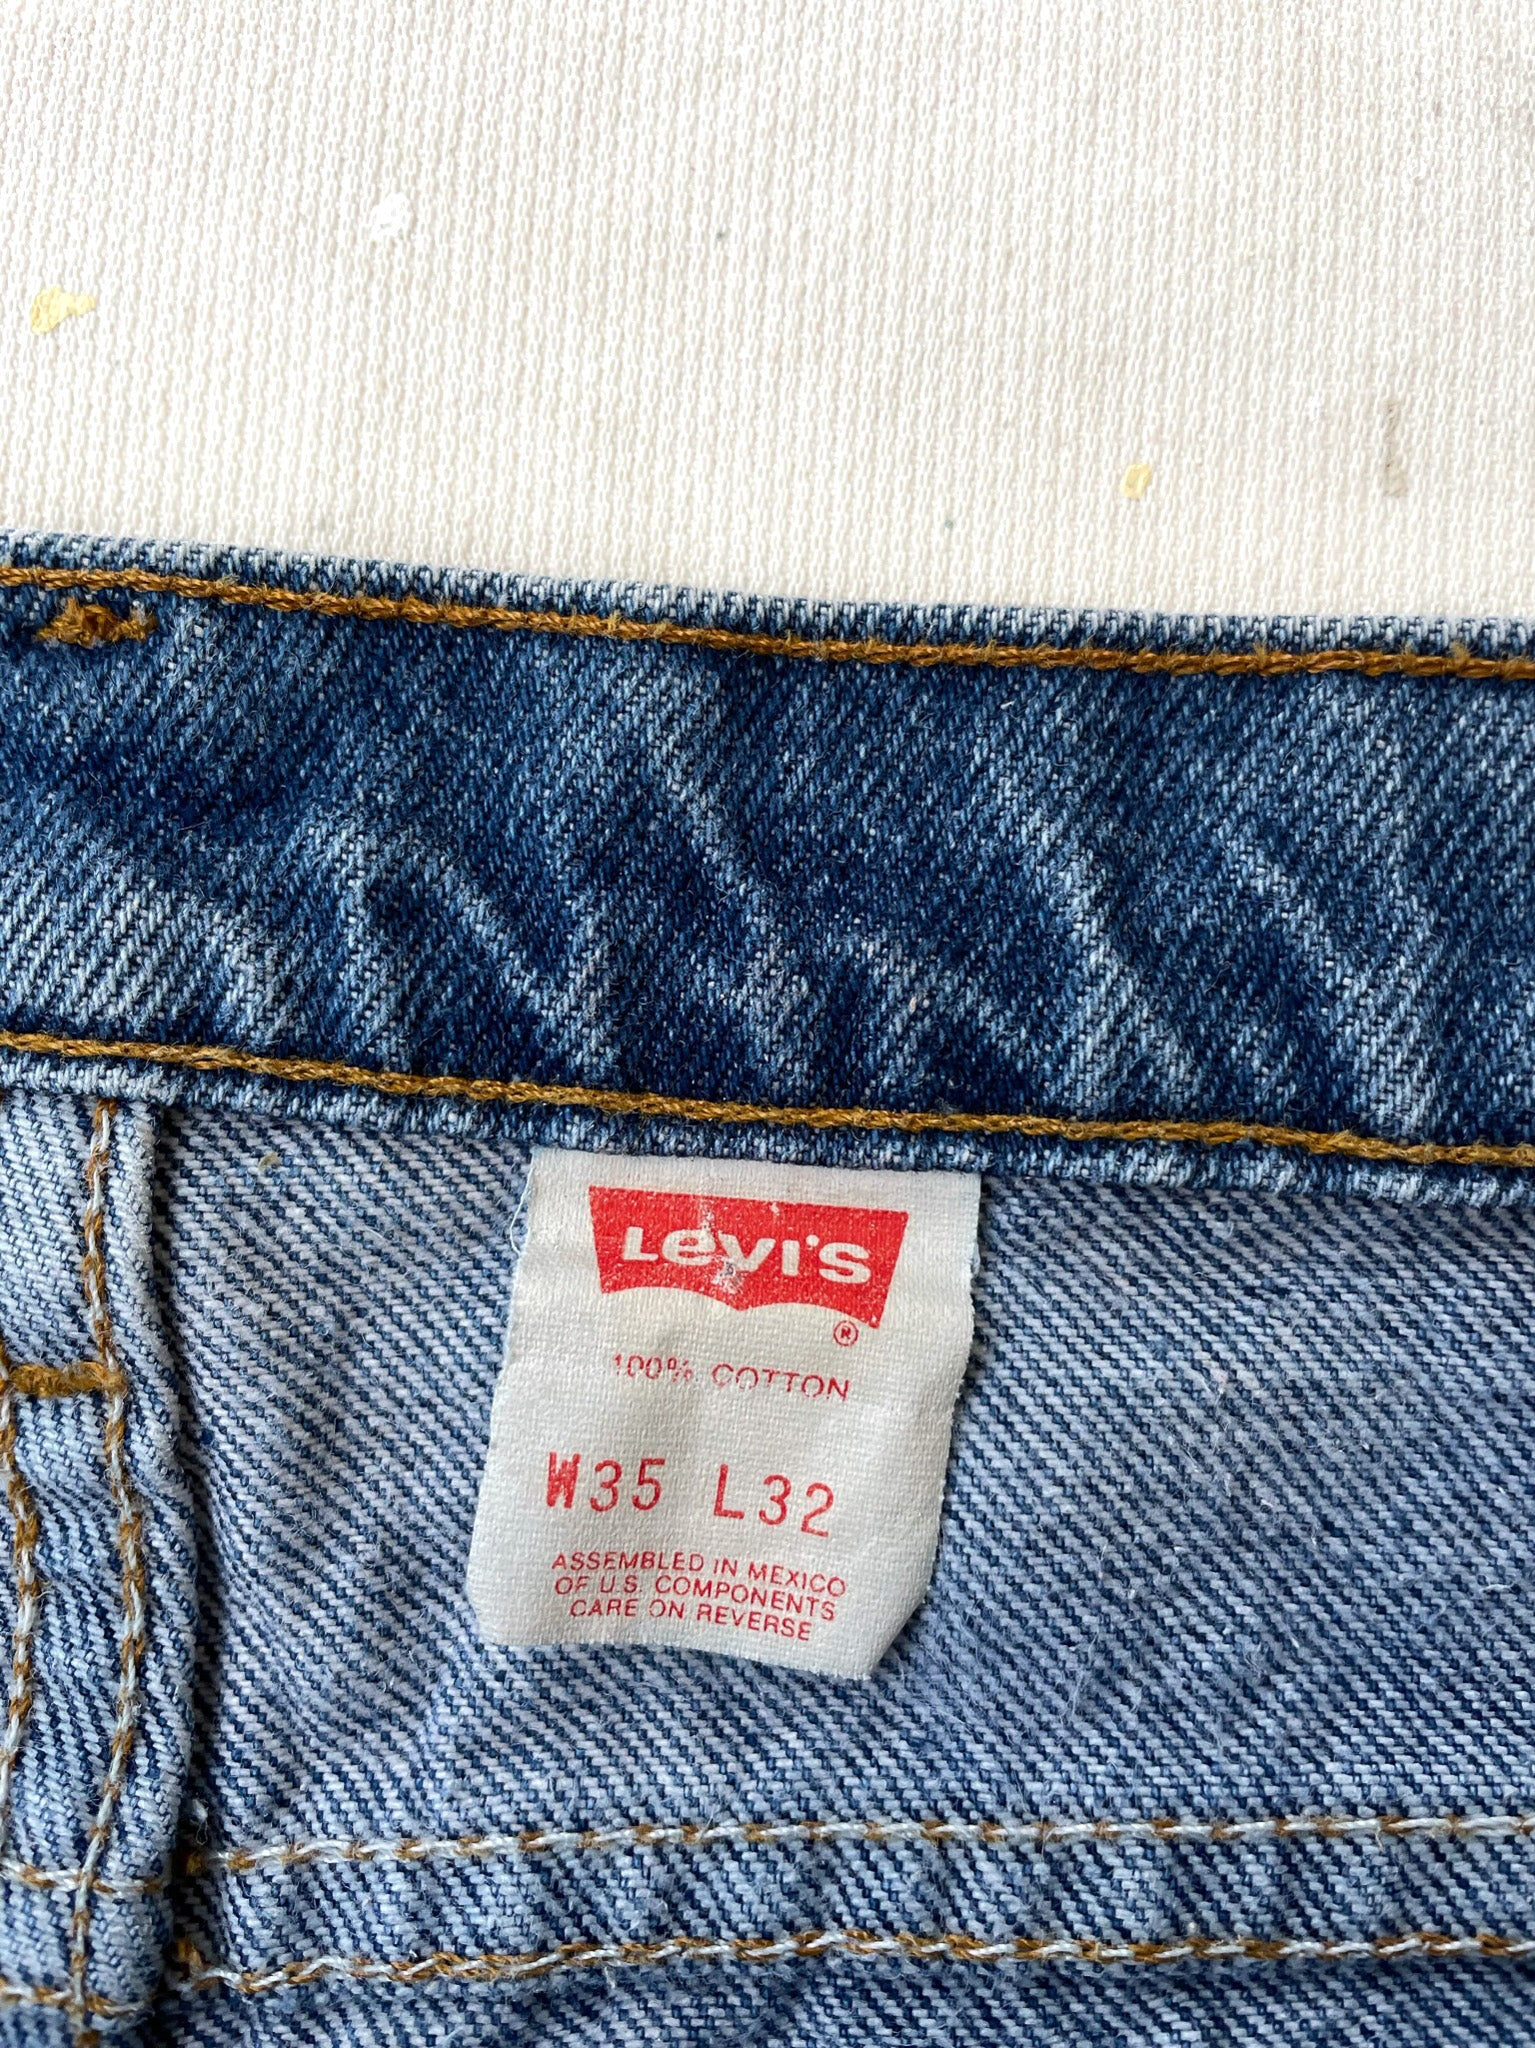 Levi's 506 Orange Tab Jeans—[34x32] – mahshu